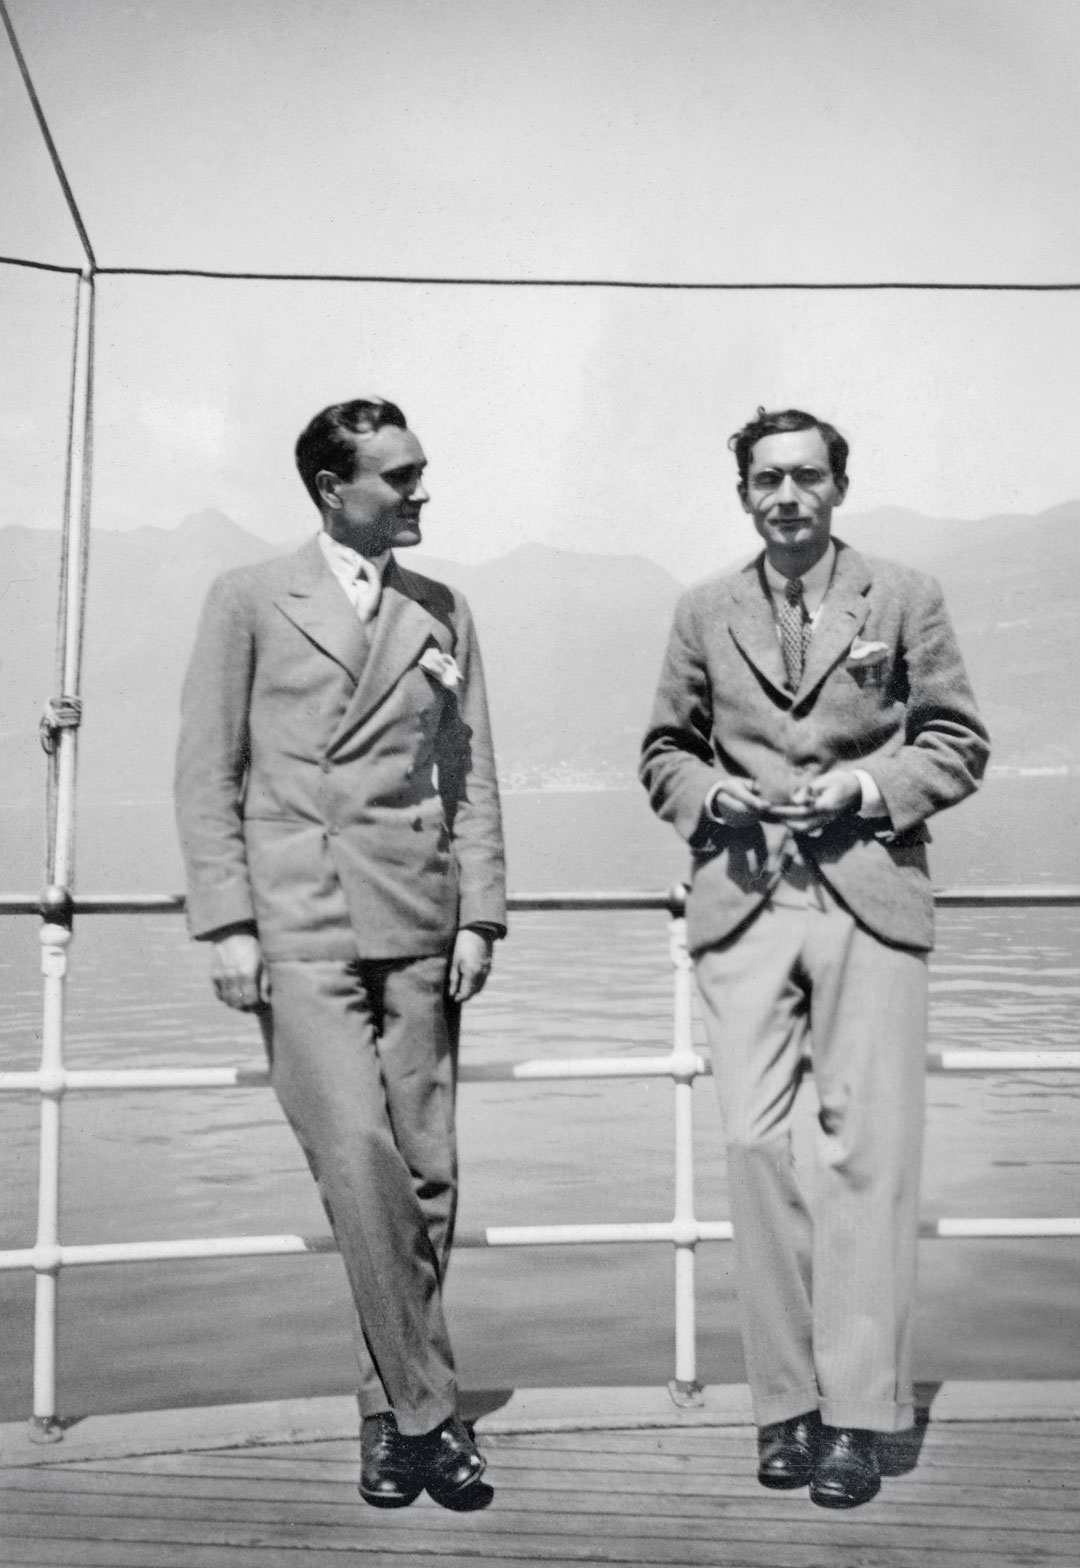 Philip Johnson (left) and Alfred H. Barr, Jr. (right), Lake Maggiore, Italy, April 1933